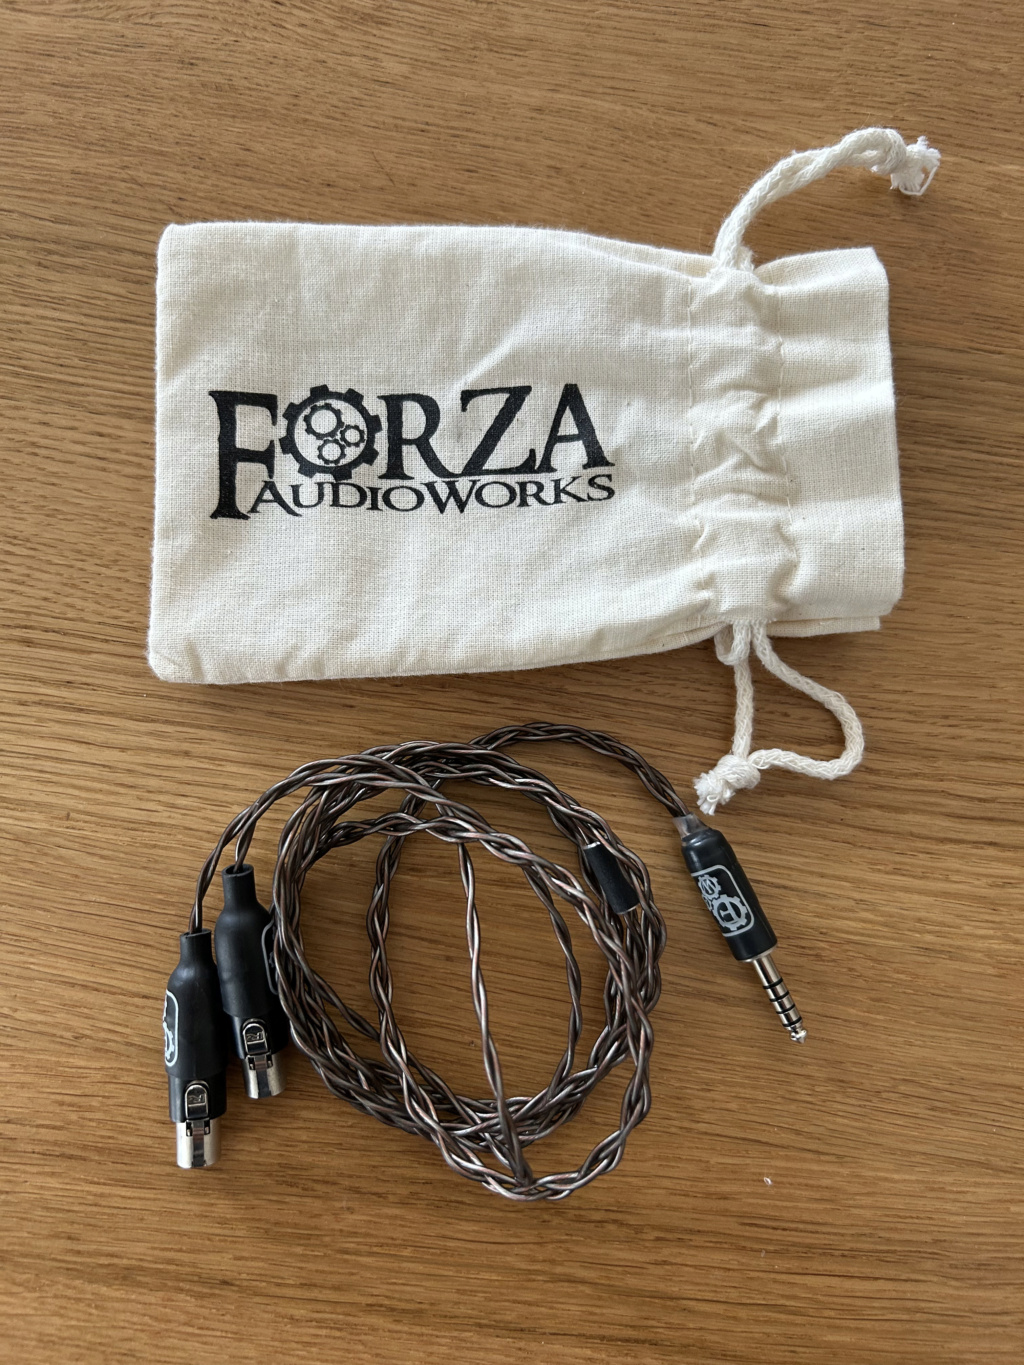 Audeze - Cavi Forza Audioworks per cuffie Audeze/Kennerton/ZMF etc Img_4310